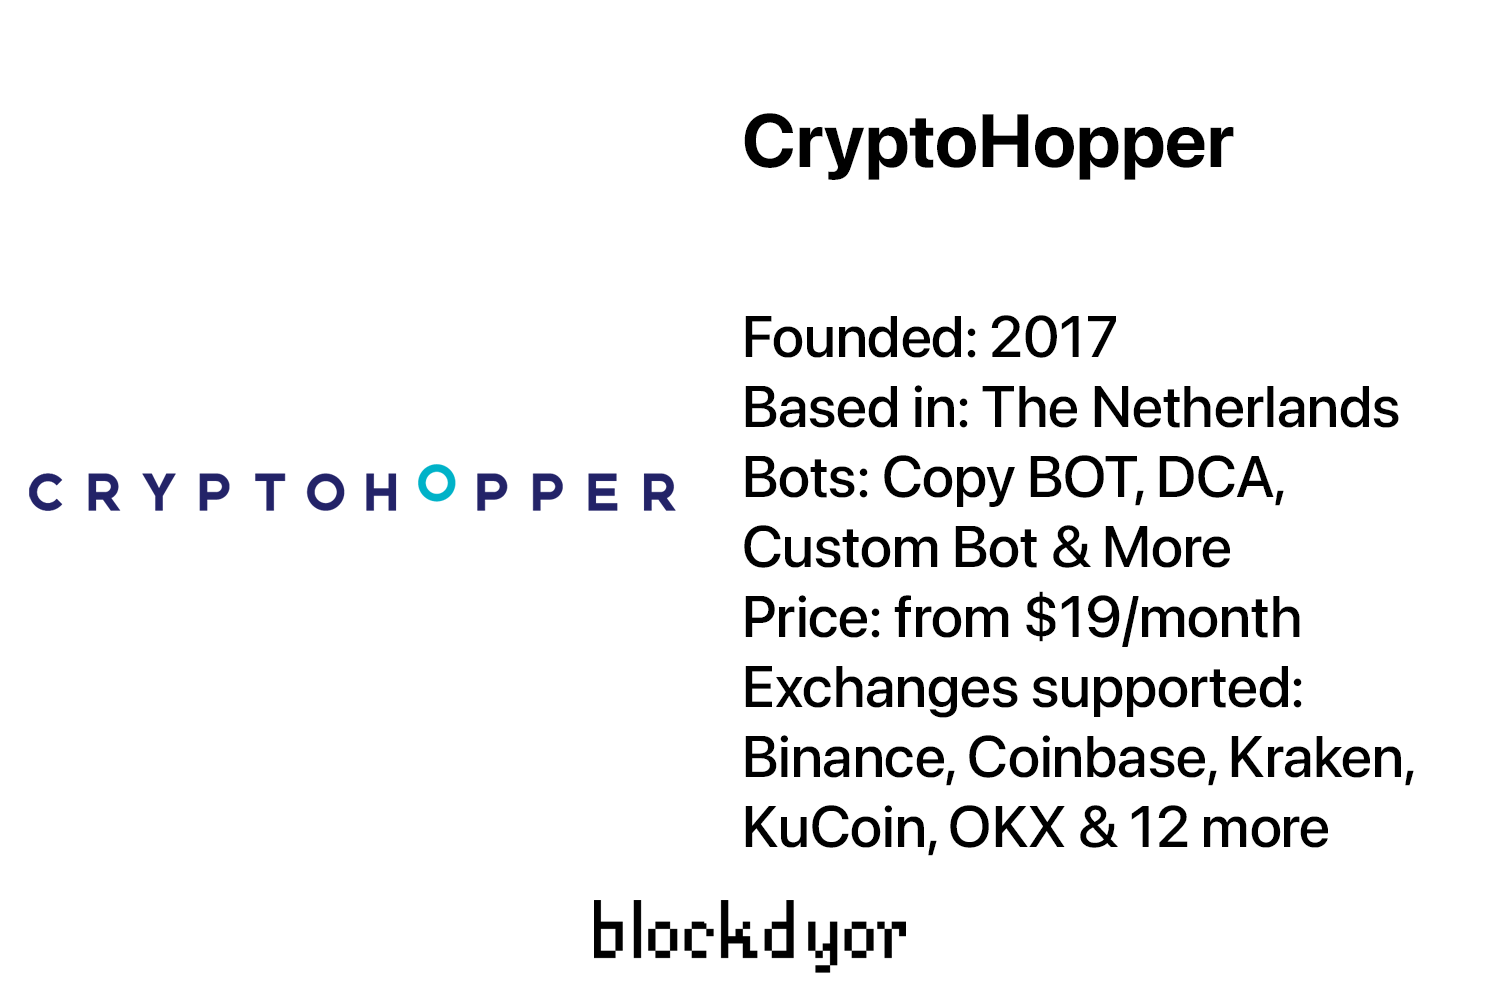 CryptoHopper Overview